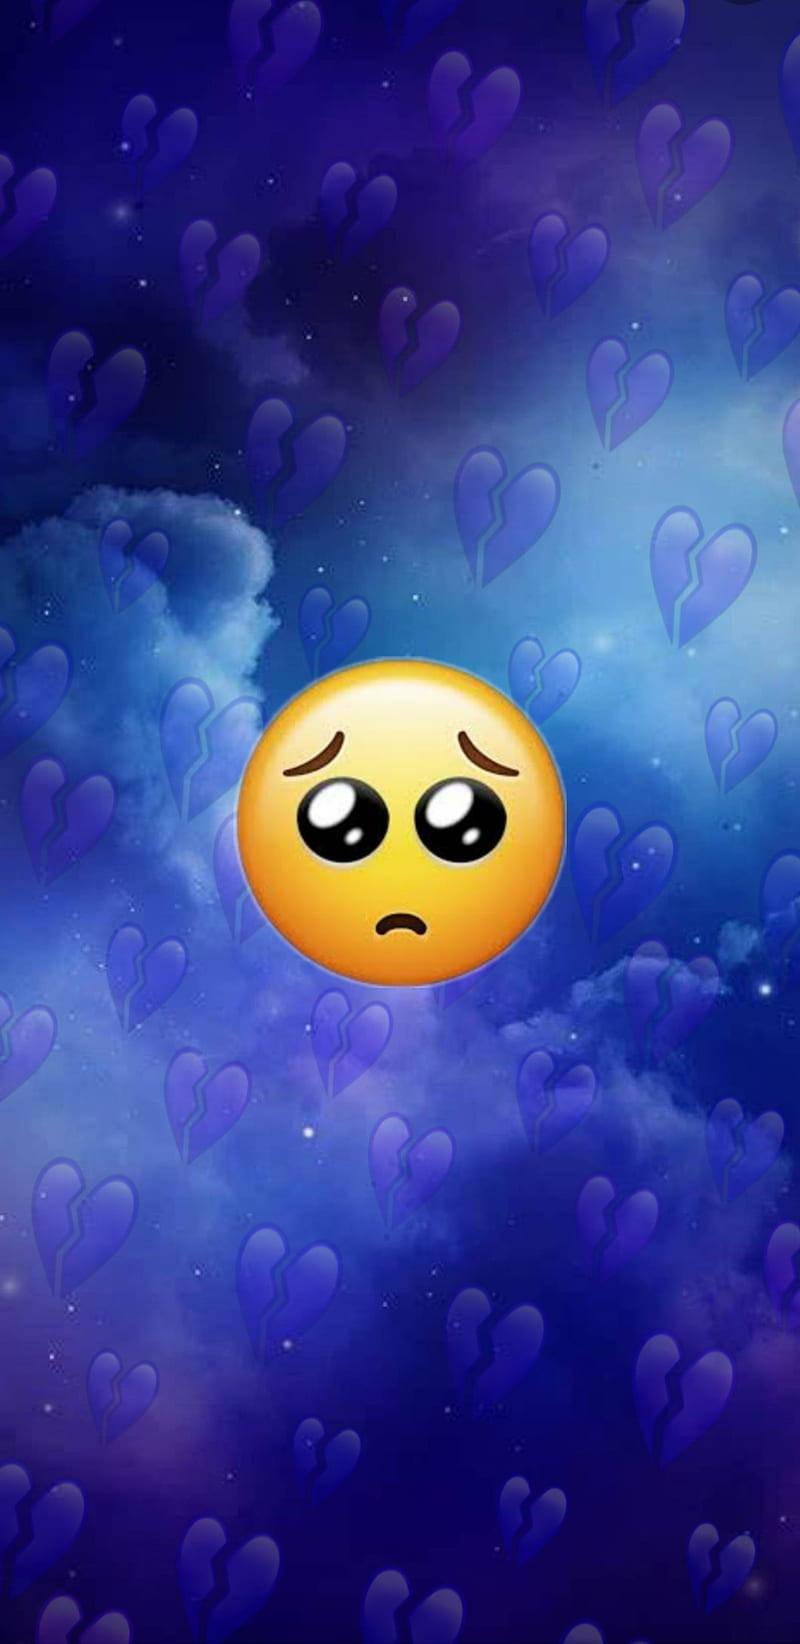 Sad Emoji With Broken Hearts In The Sky Wallpaper